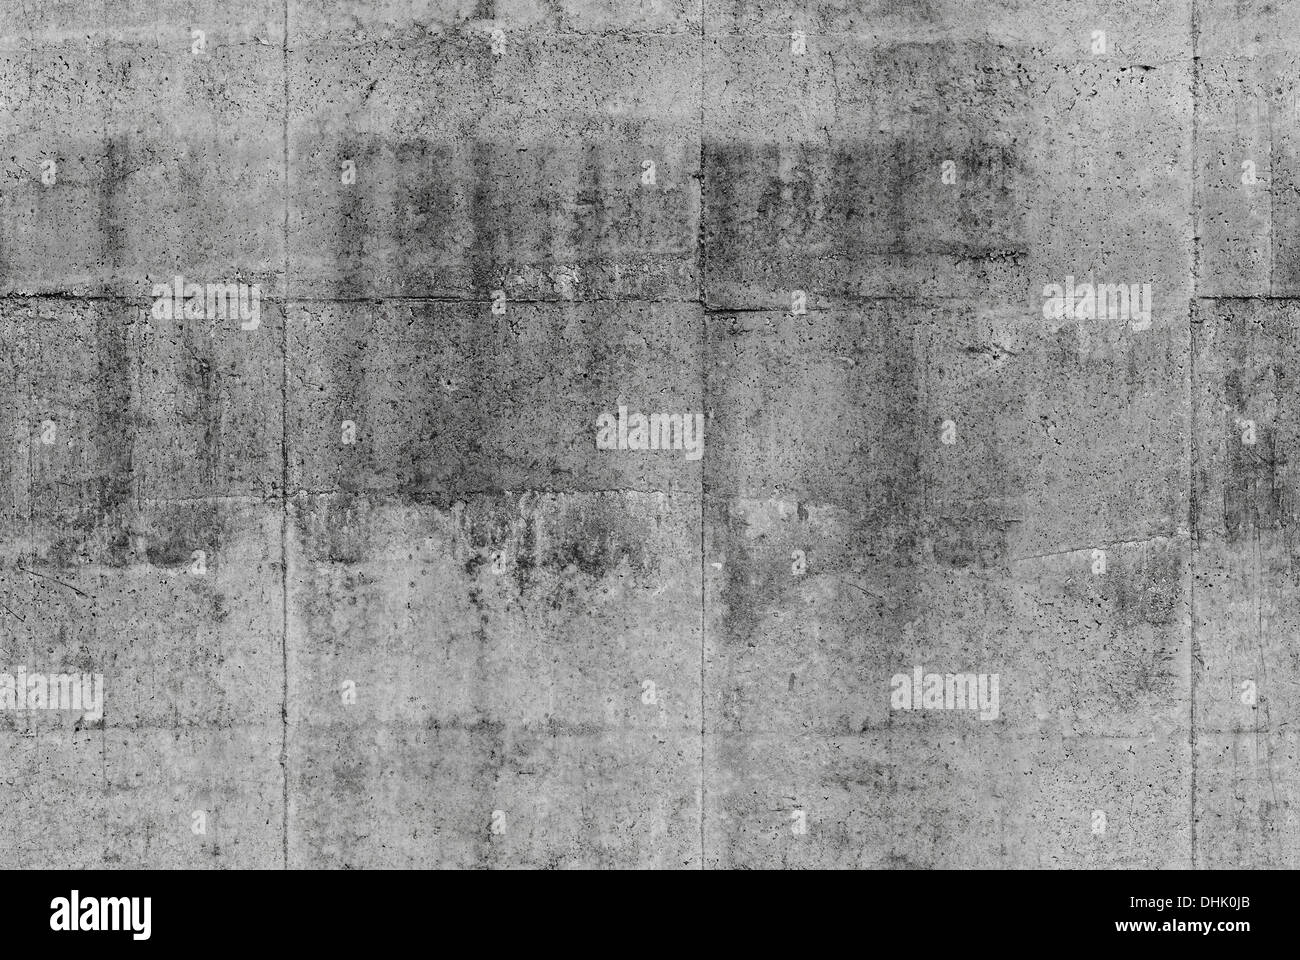 Detailed seamless dark gray concrete wall background photo texture Stock Photo